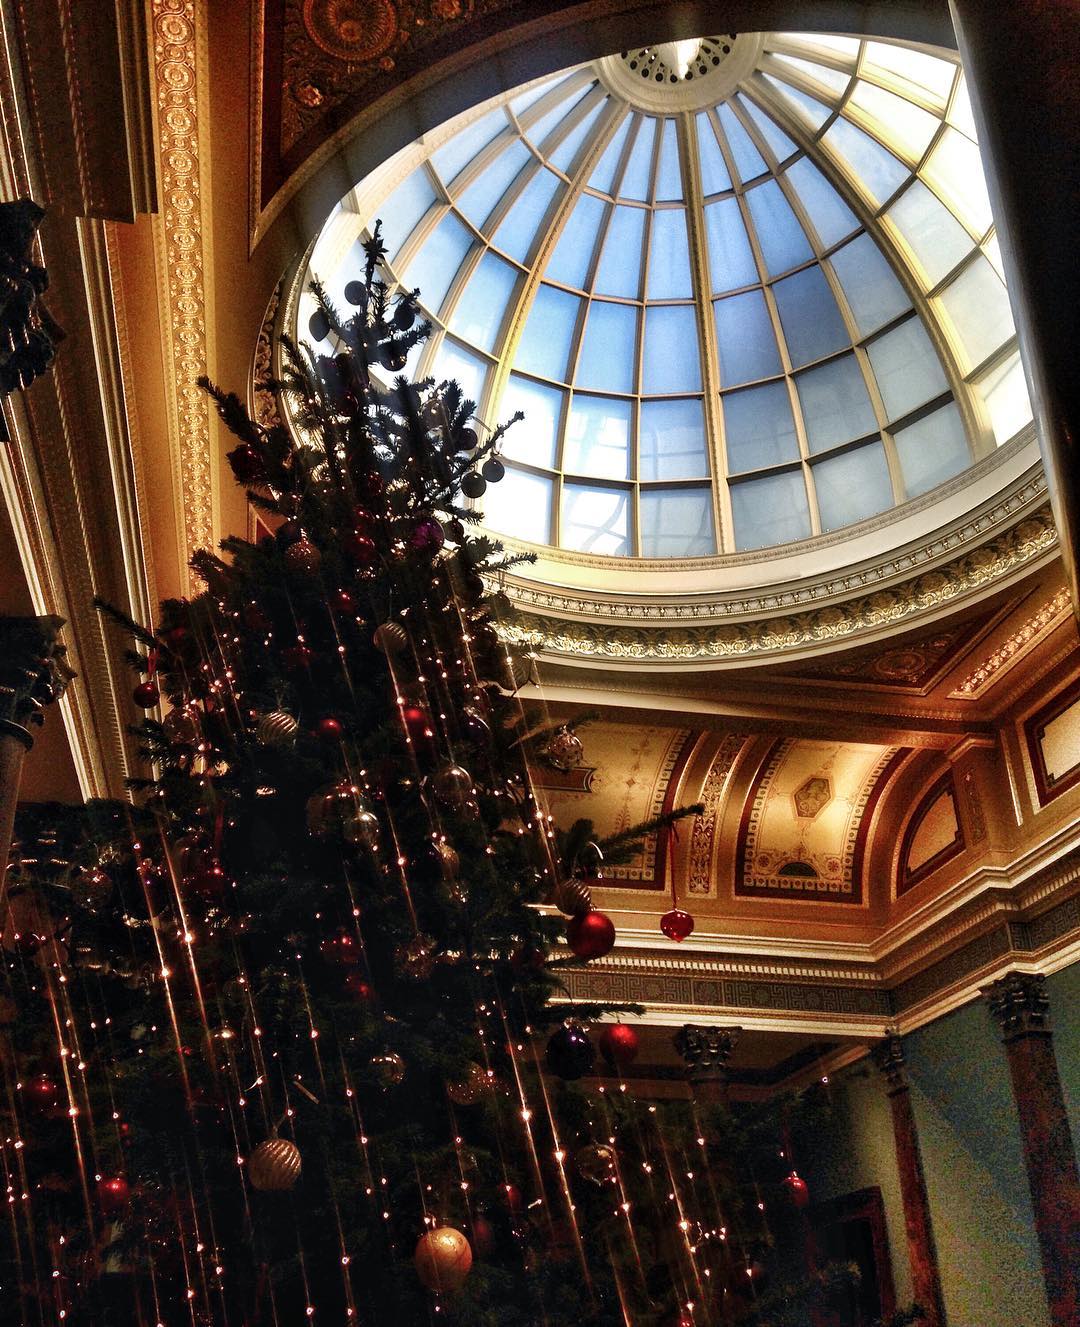 Londra a Natale si riempie di splendidi alberi addobbati a festa